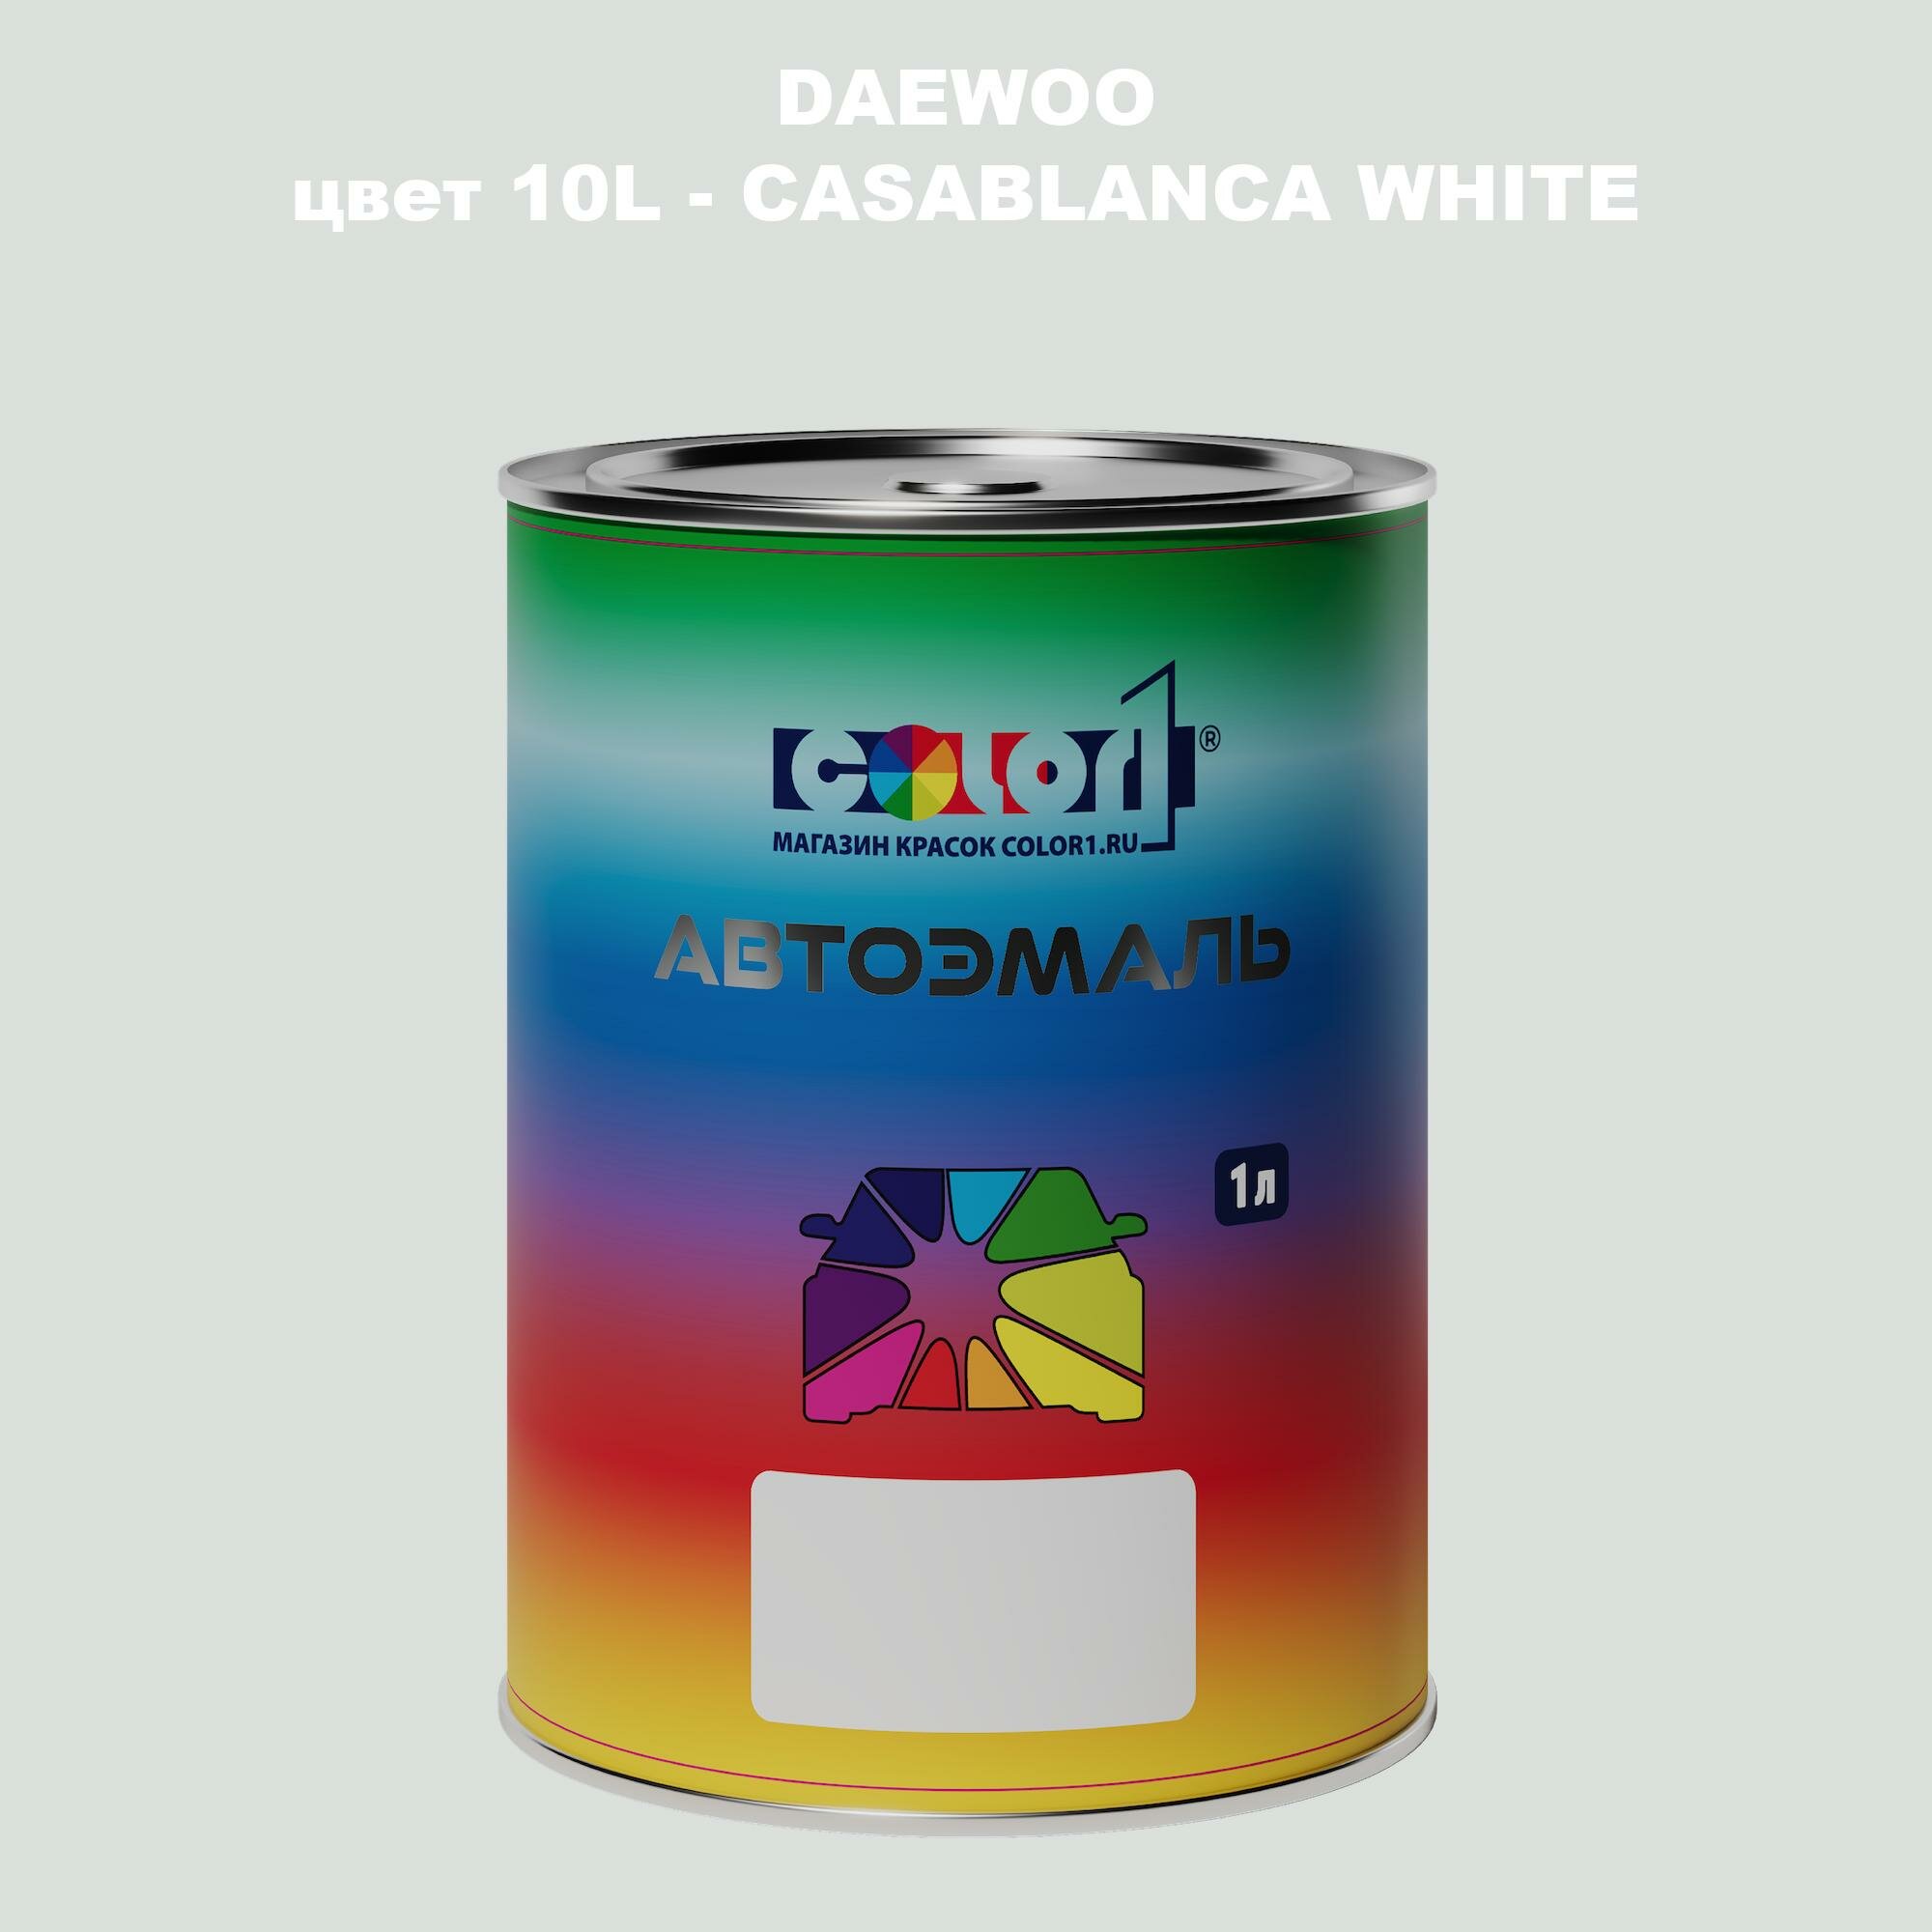 Автомобильная краска COLOR1 для DAEWOO, цвет 10L - CASABLANCA WHITE